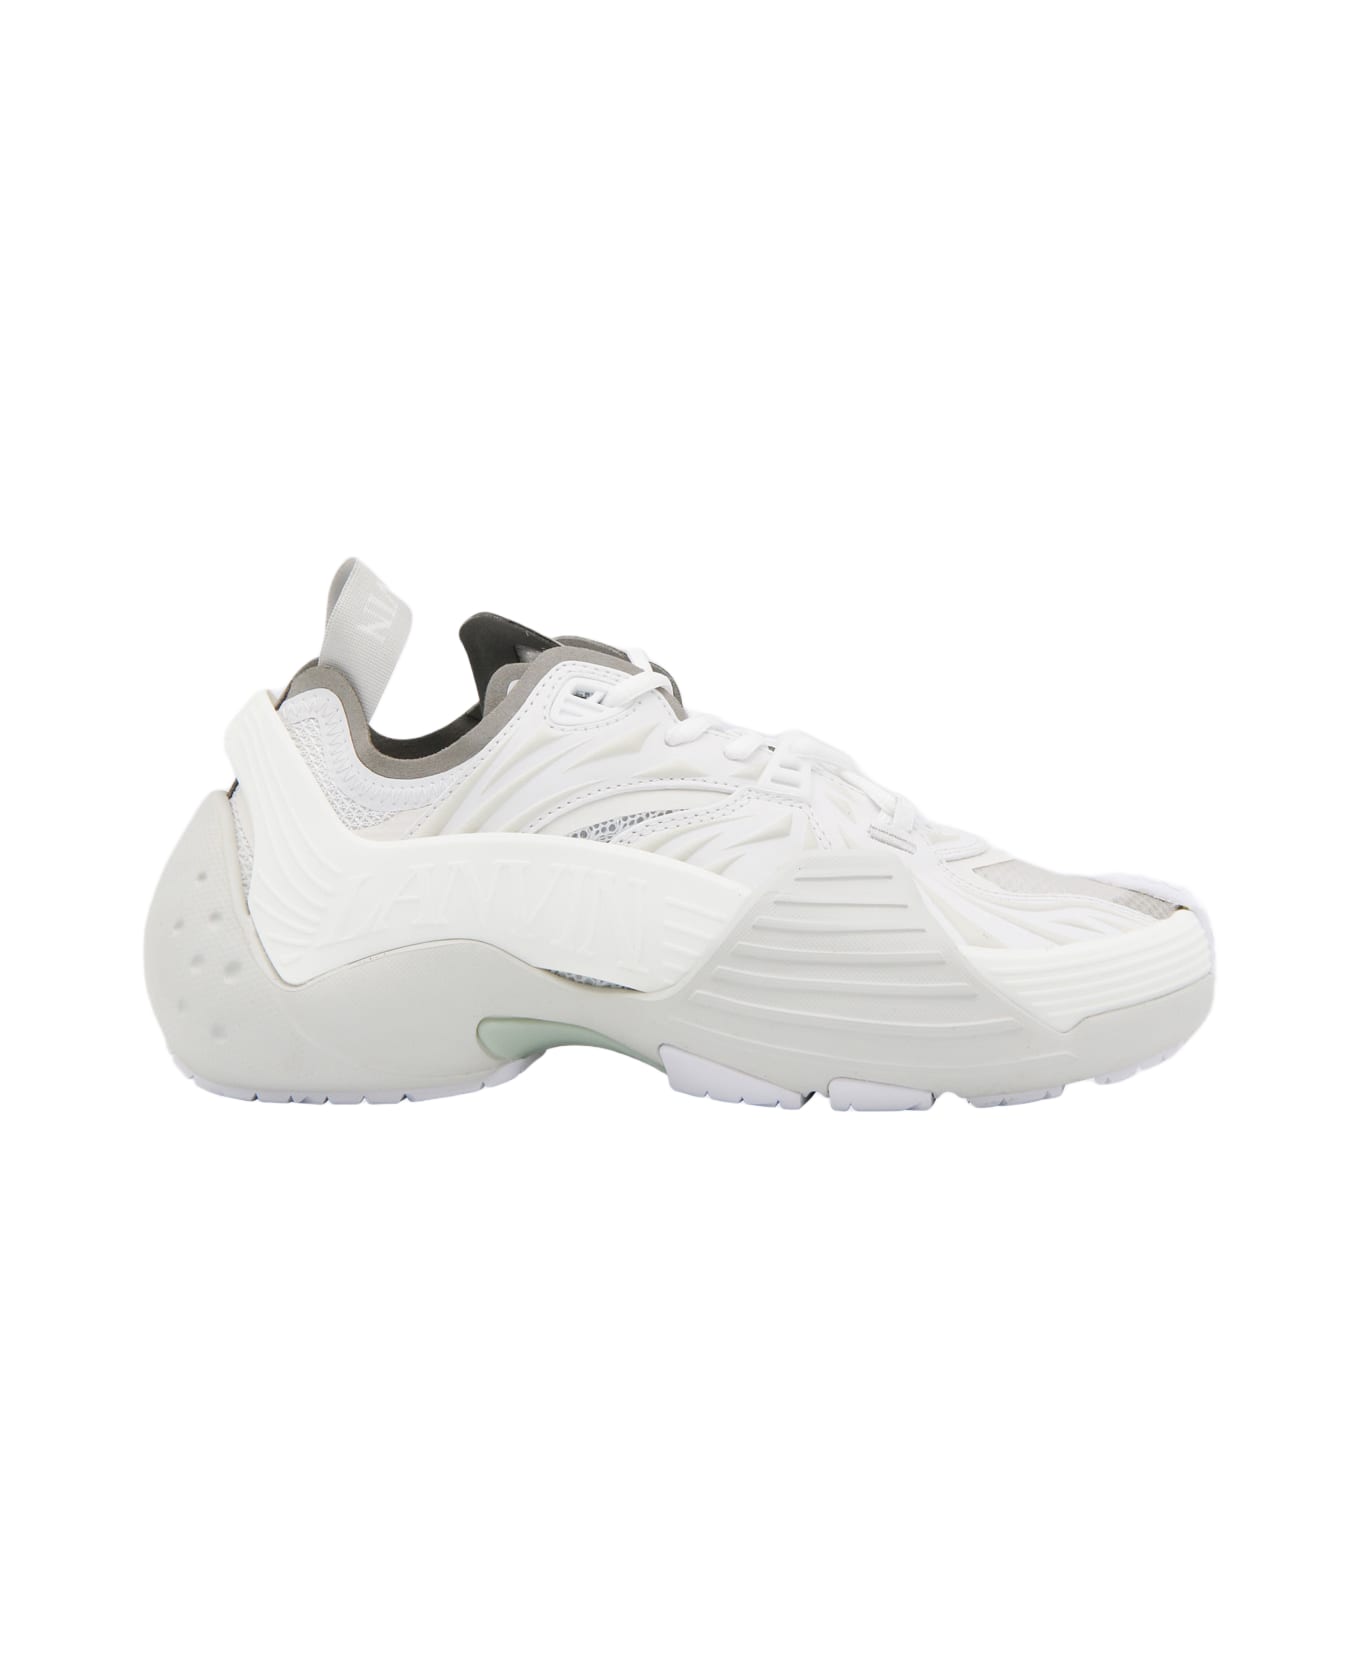 Lanvin White Leather Flash X Sneakers - White